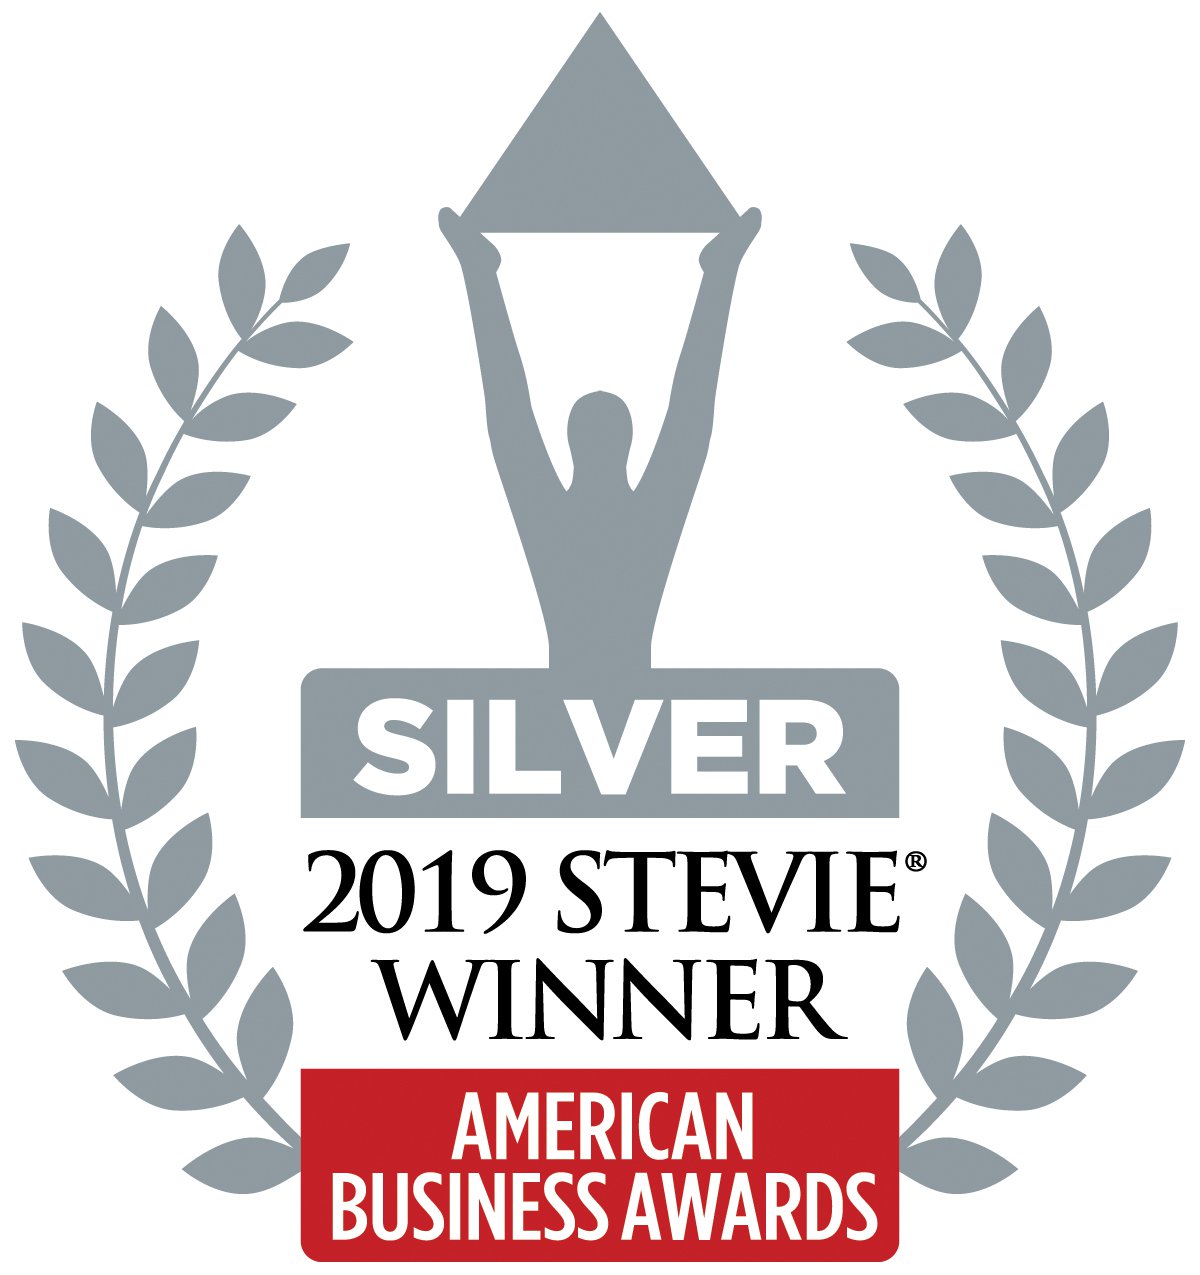 Silver Stevie Award